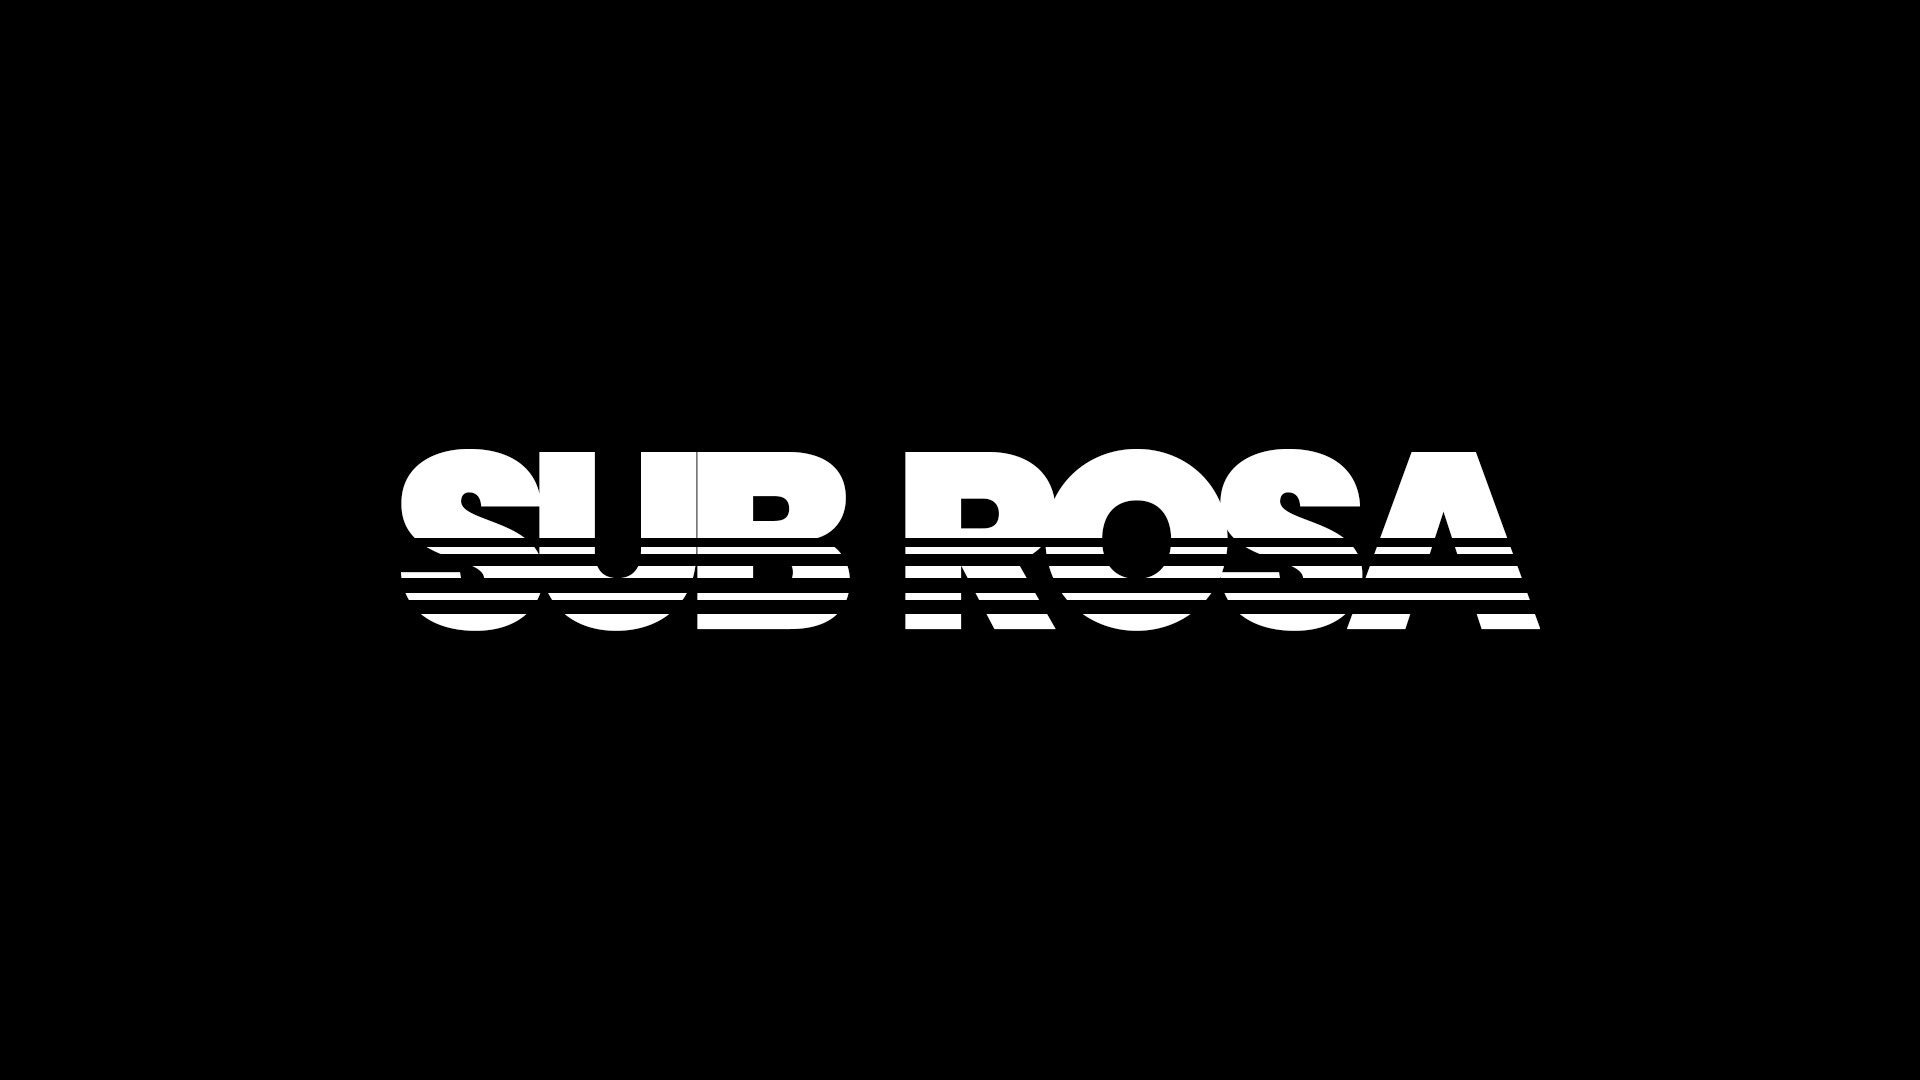 Subrosa Logo - Sub Rosa logo (1080p Resolution) (Font: Poppins Bold) : subrosa